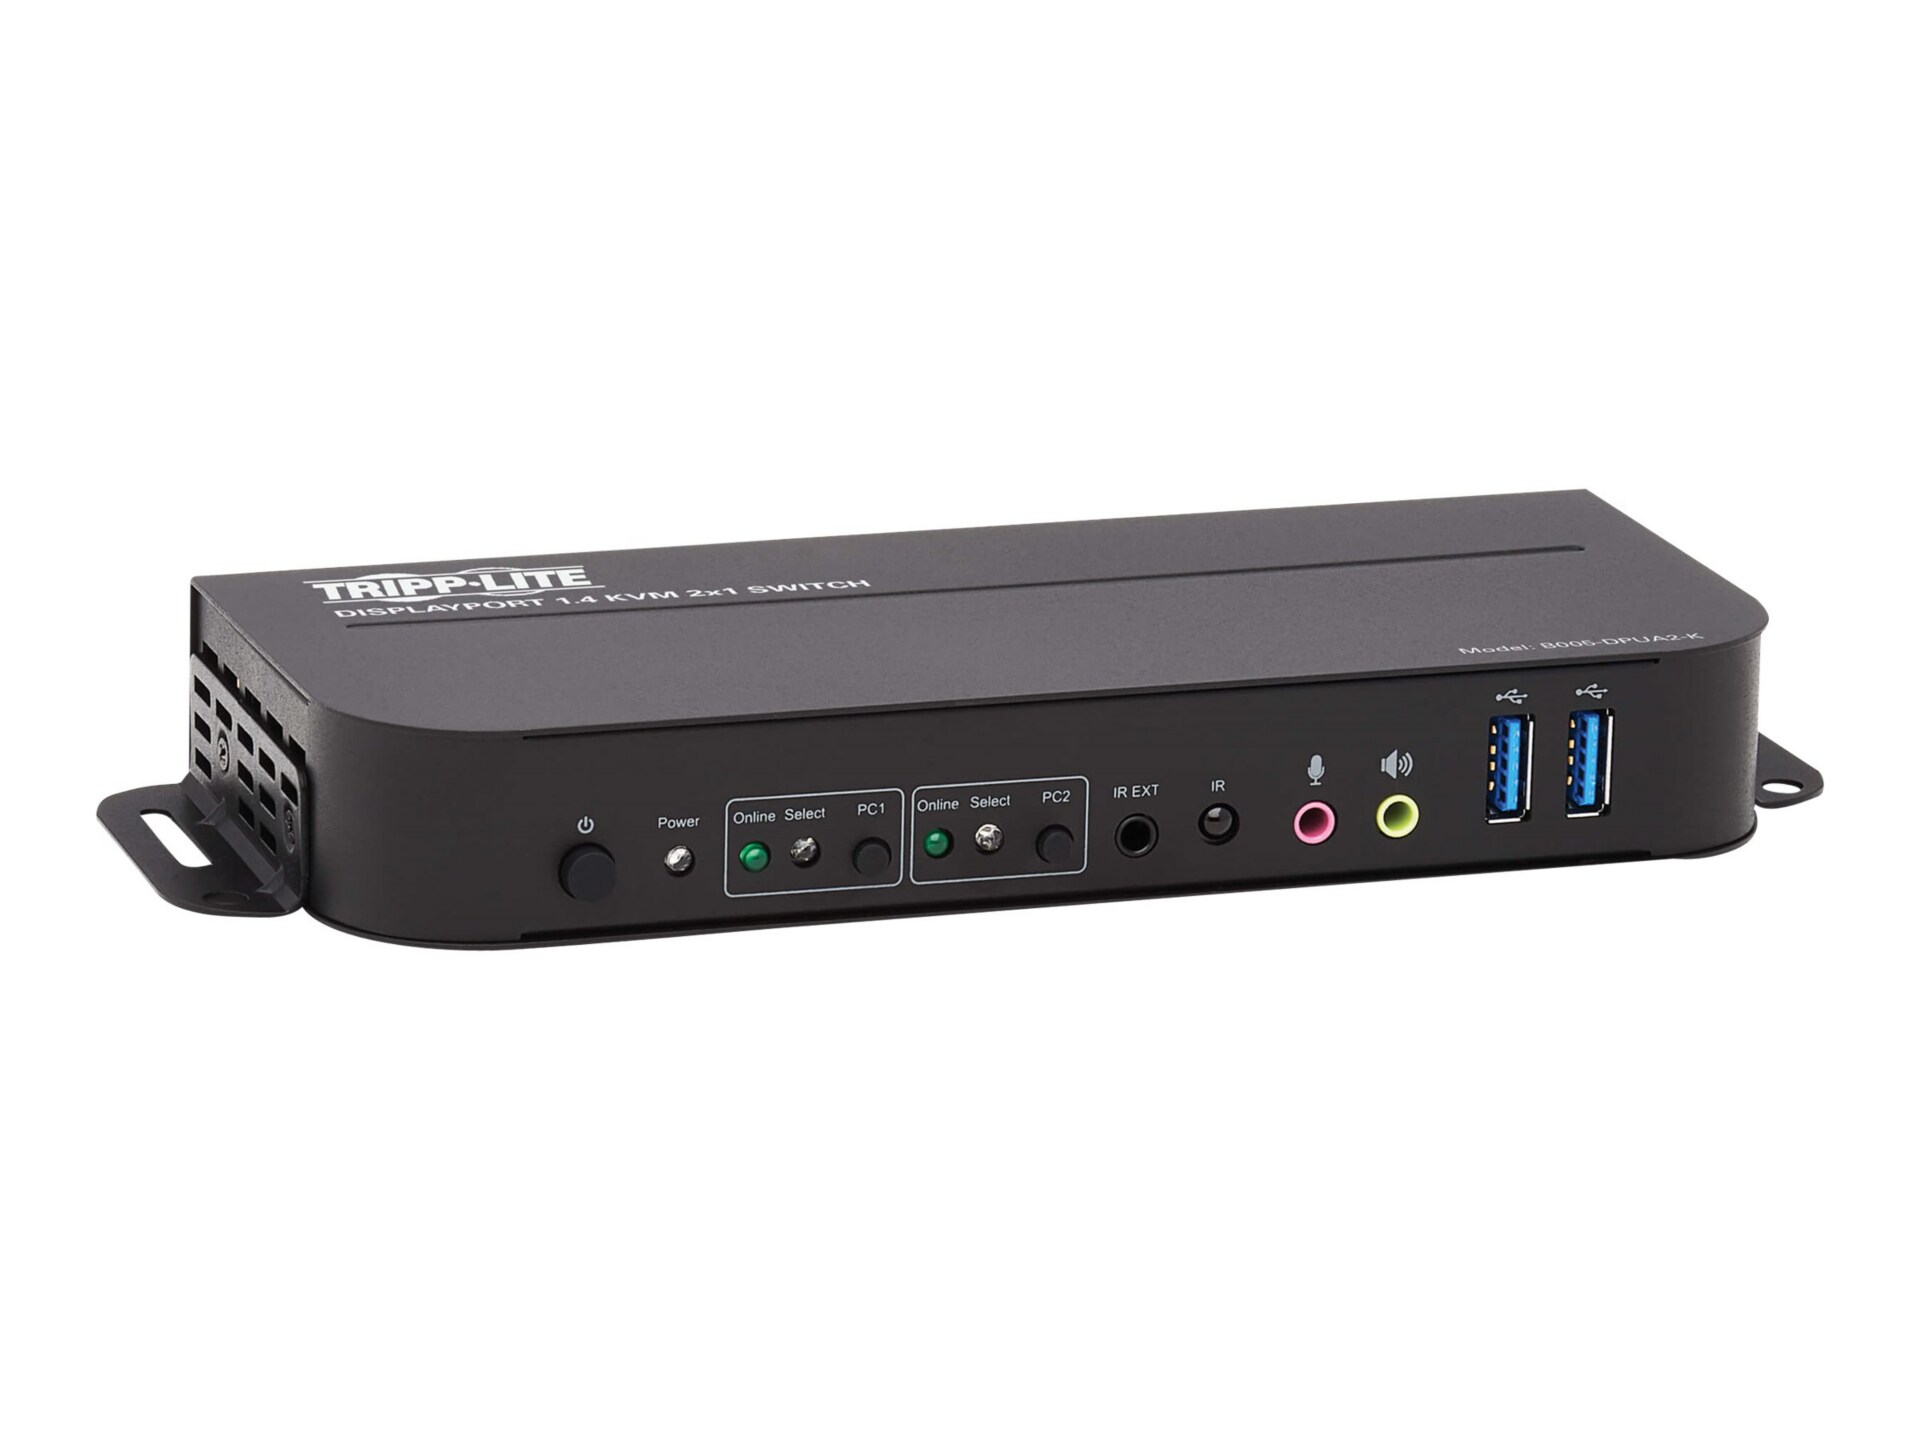 Eaton Tripp Lite series DisplayPort USB KVM Switch 2-Port 4K 60Hz HDR DP 1.4 USB Cables - KVM / audio / USB switch - 2